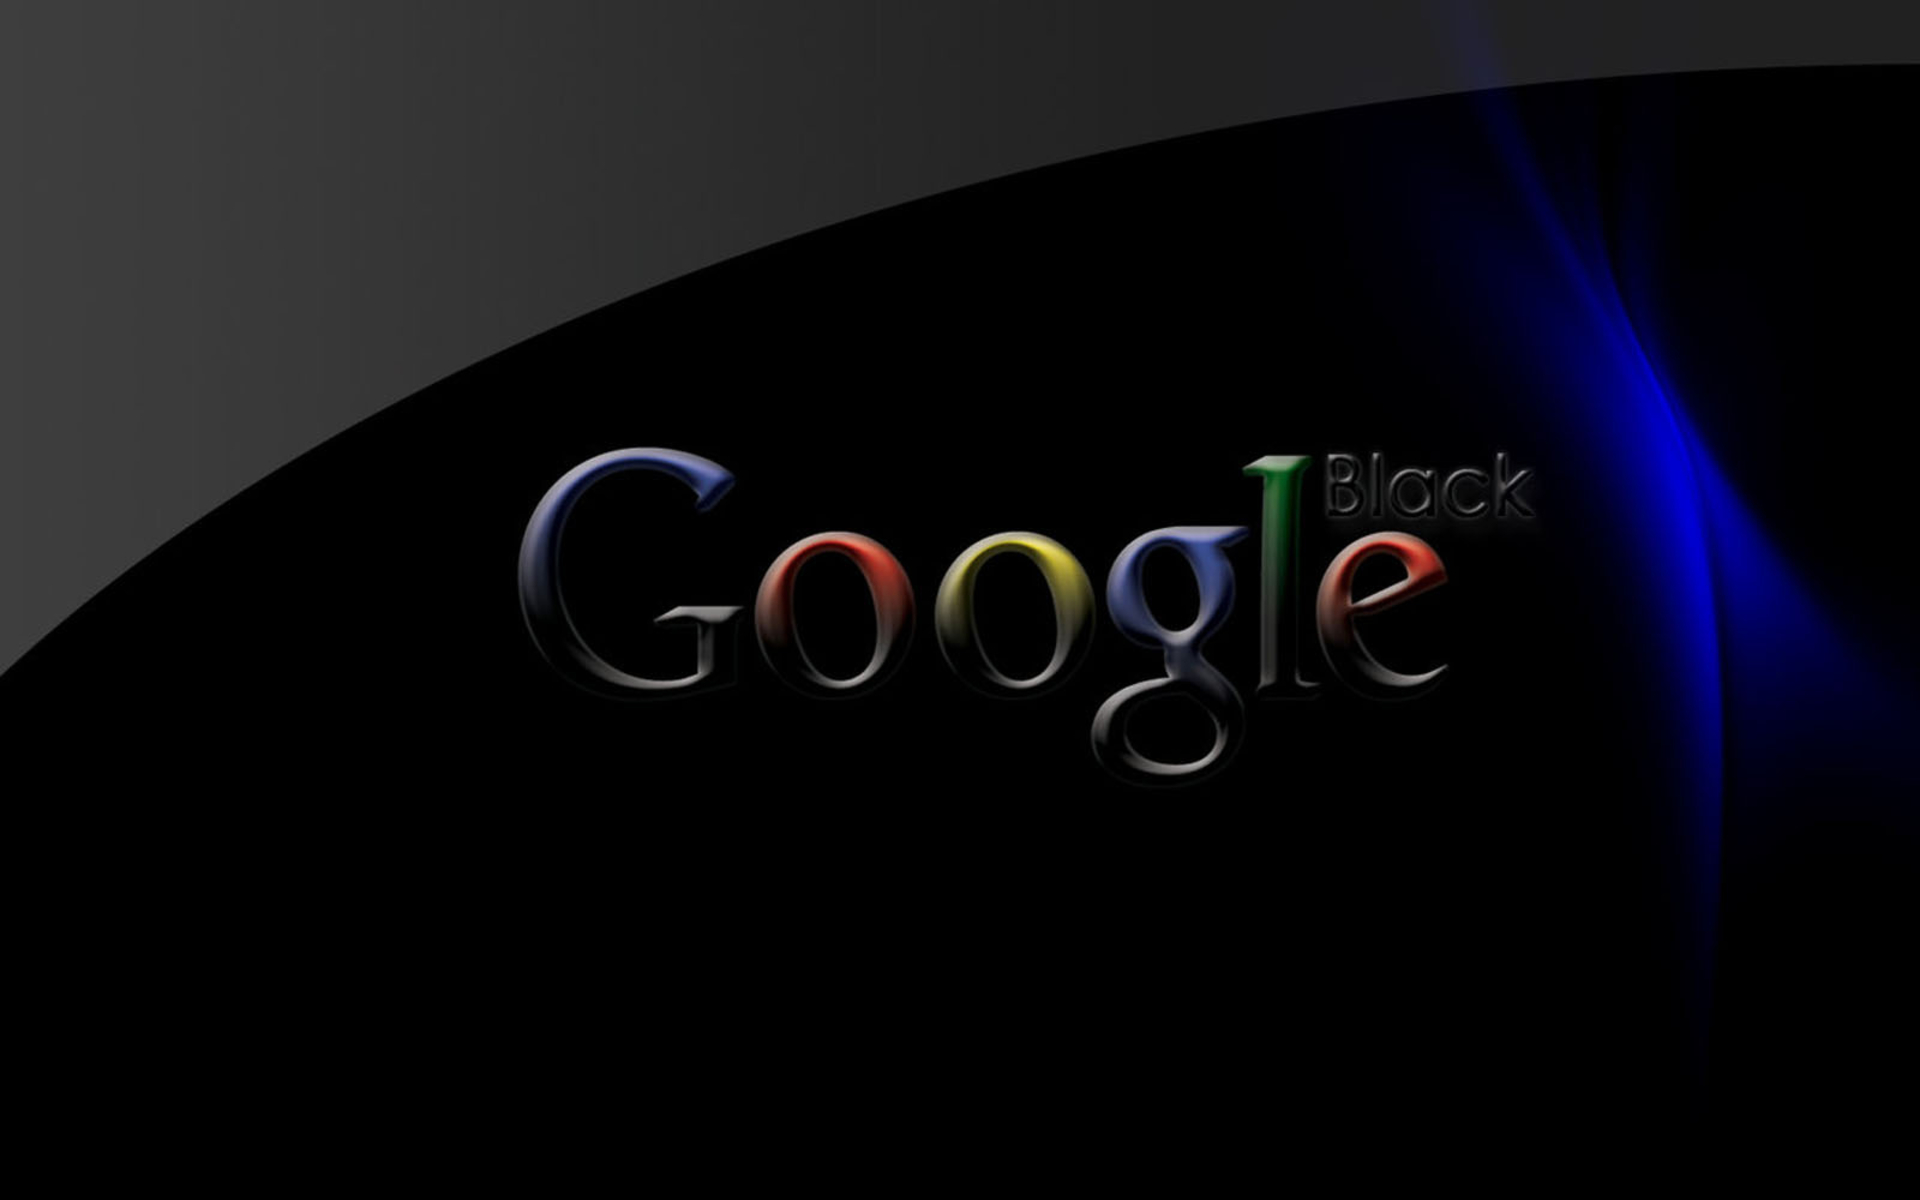 Black Google Wallpaper 1920x1200